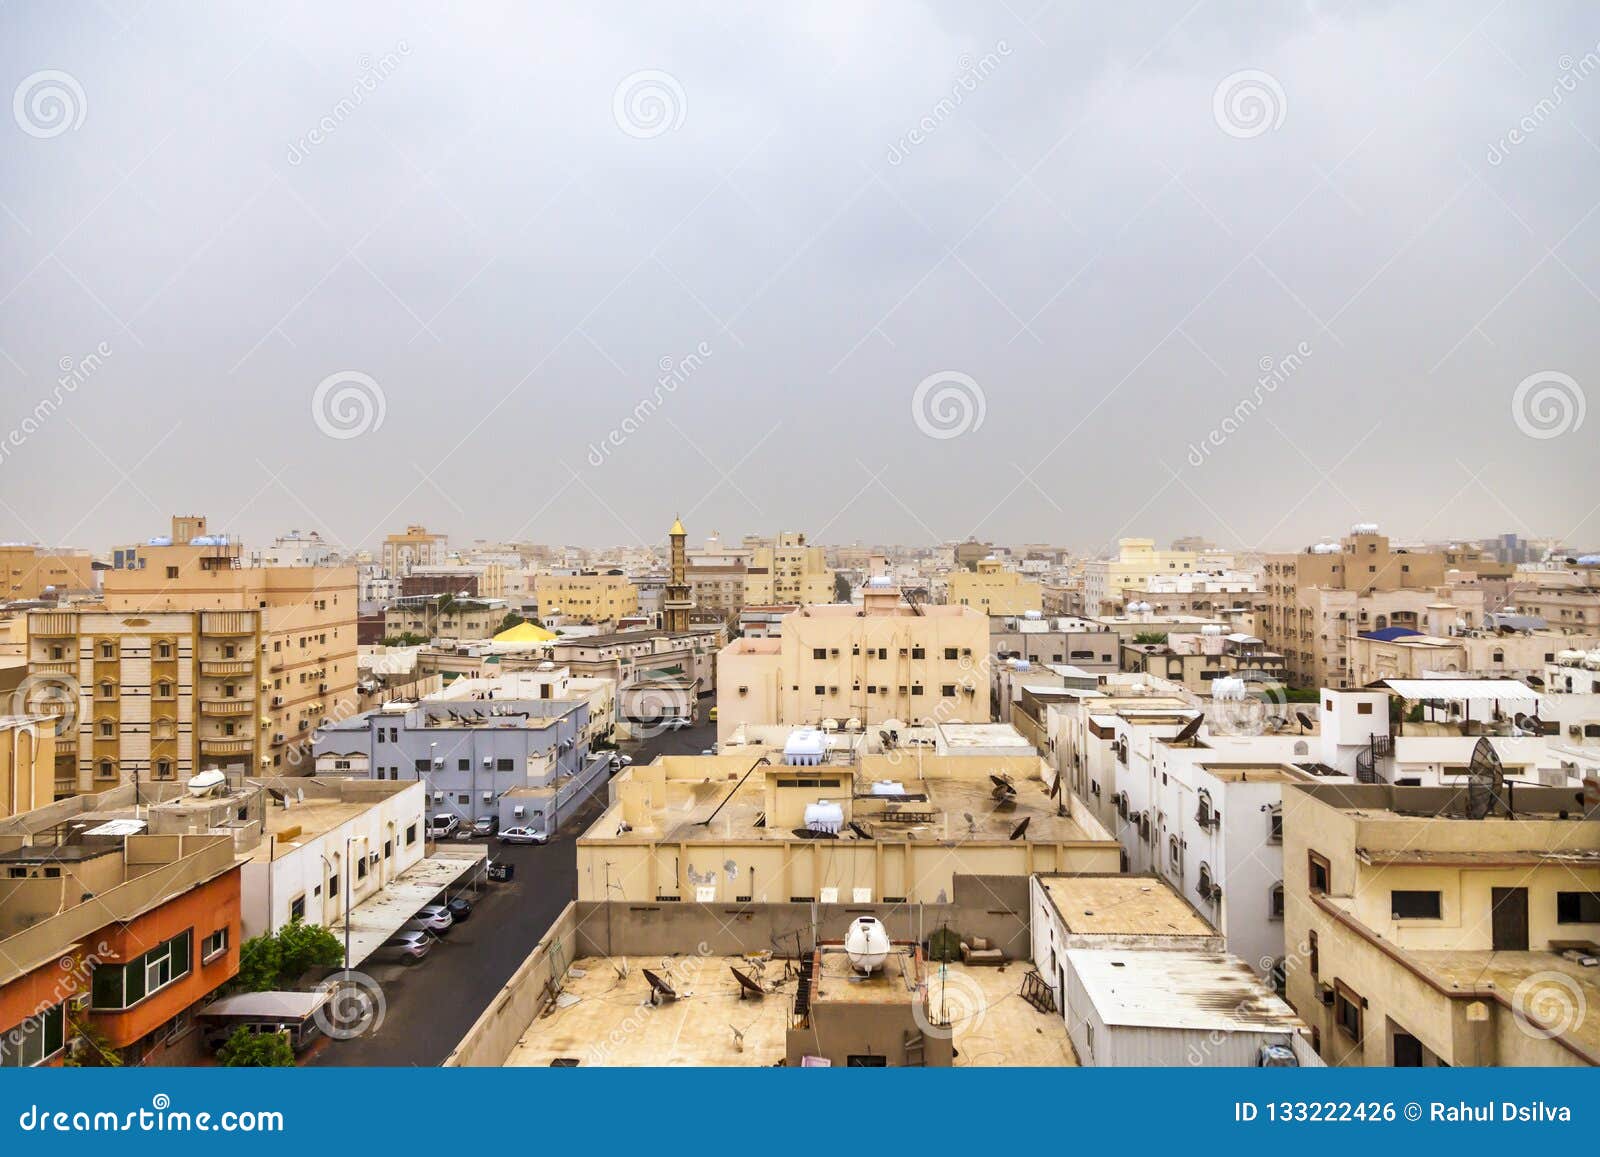 arabie saoudite paysage ville